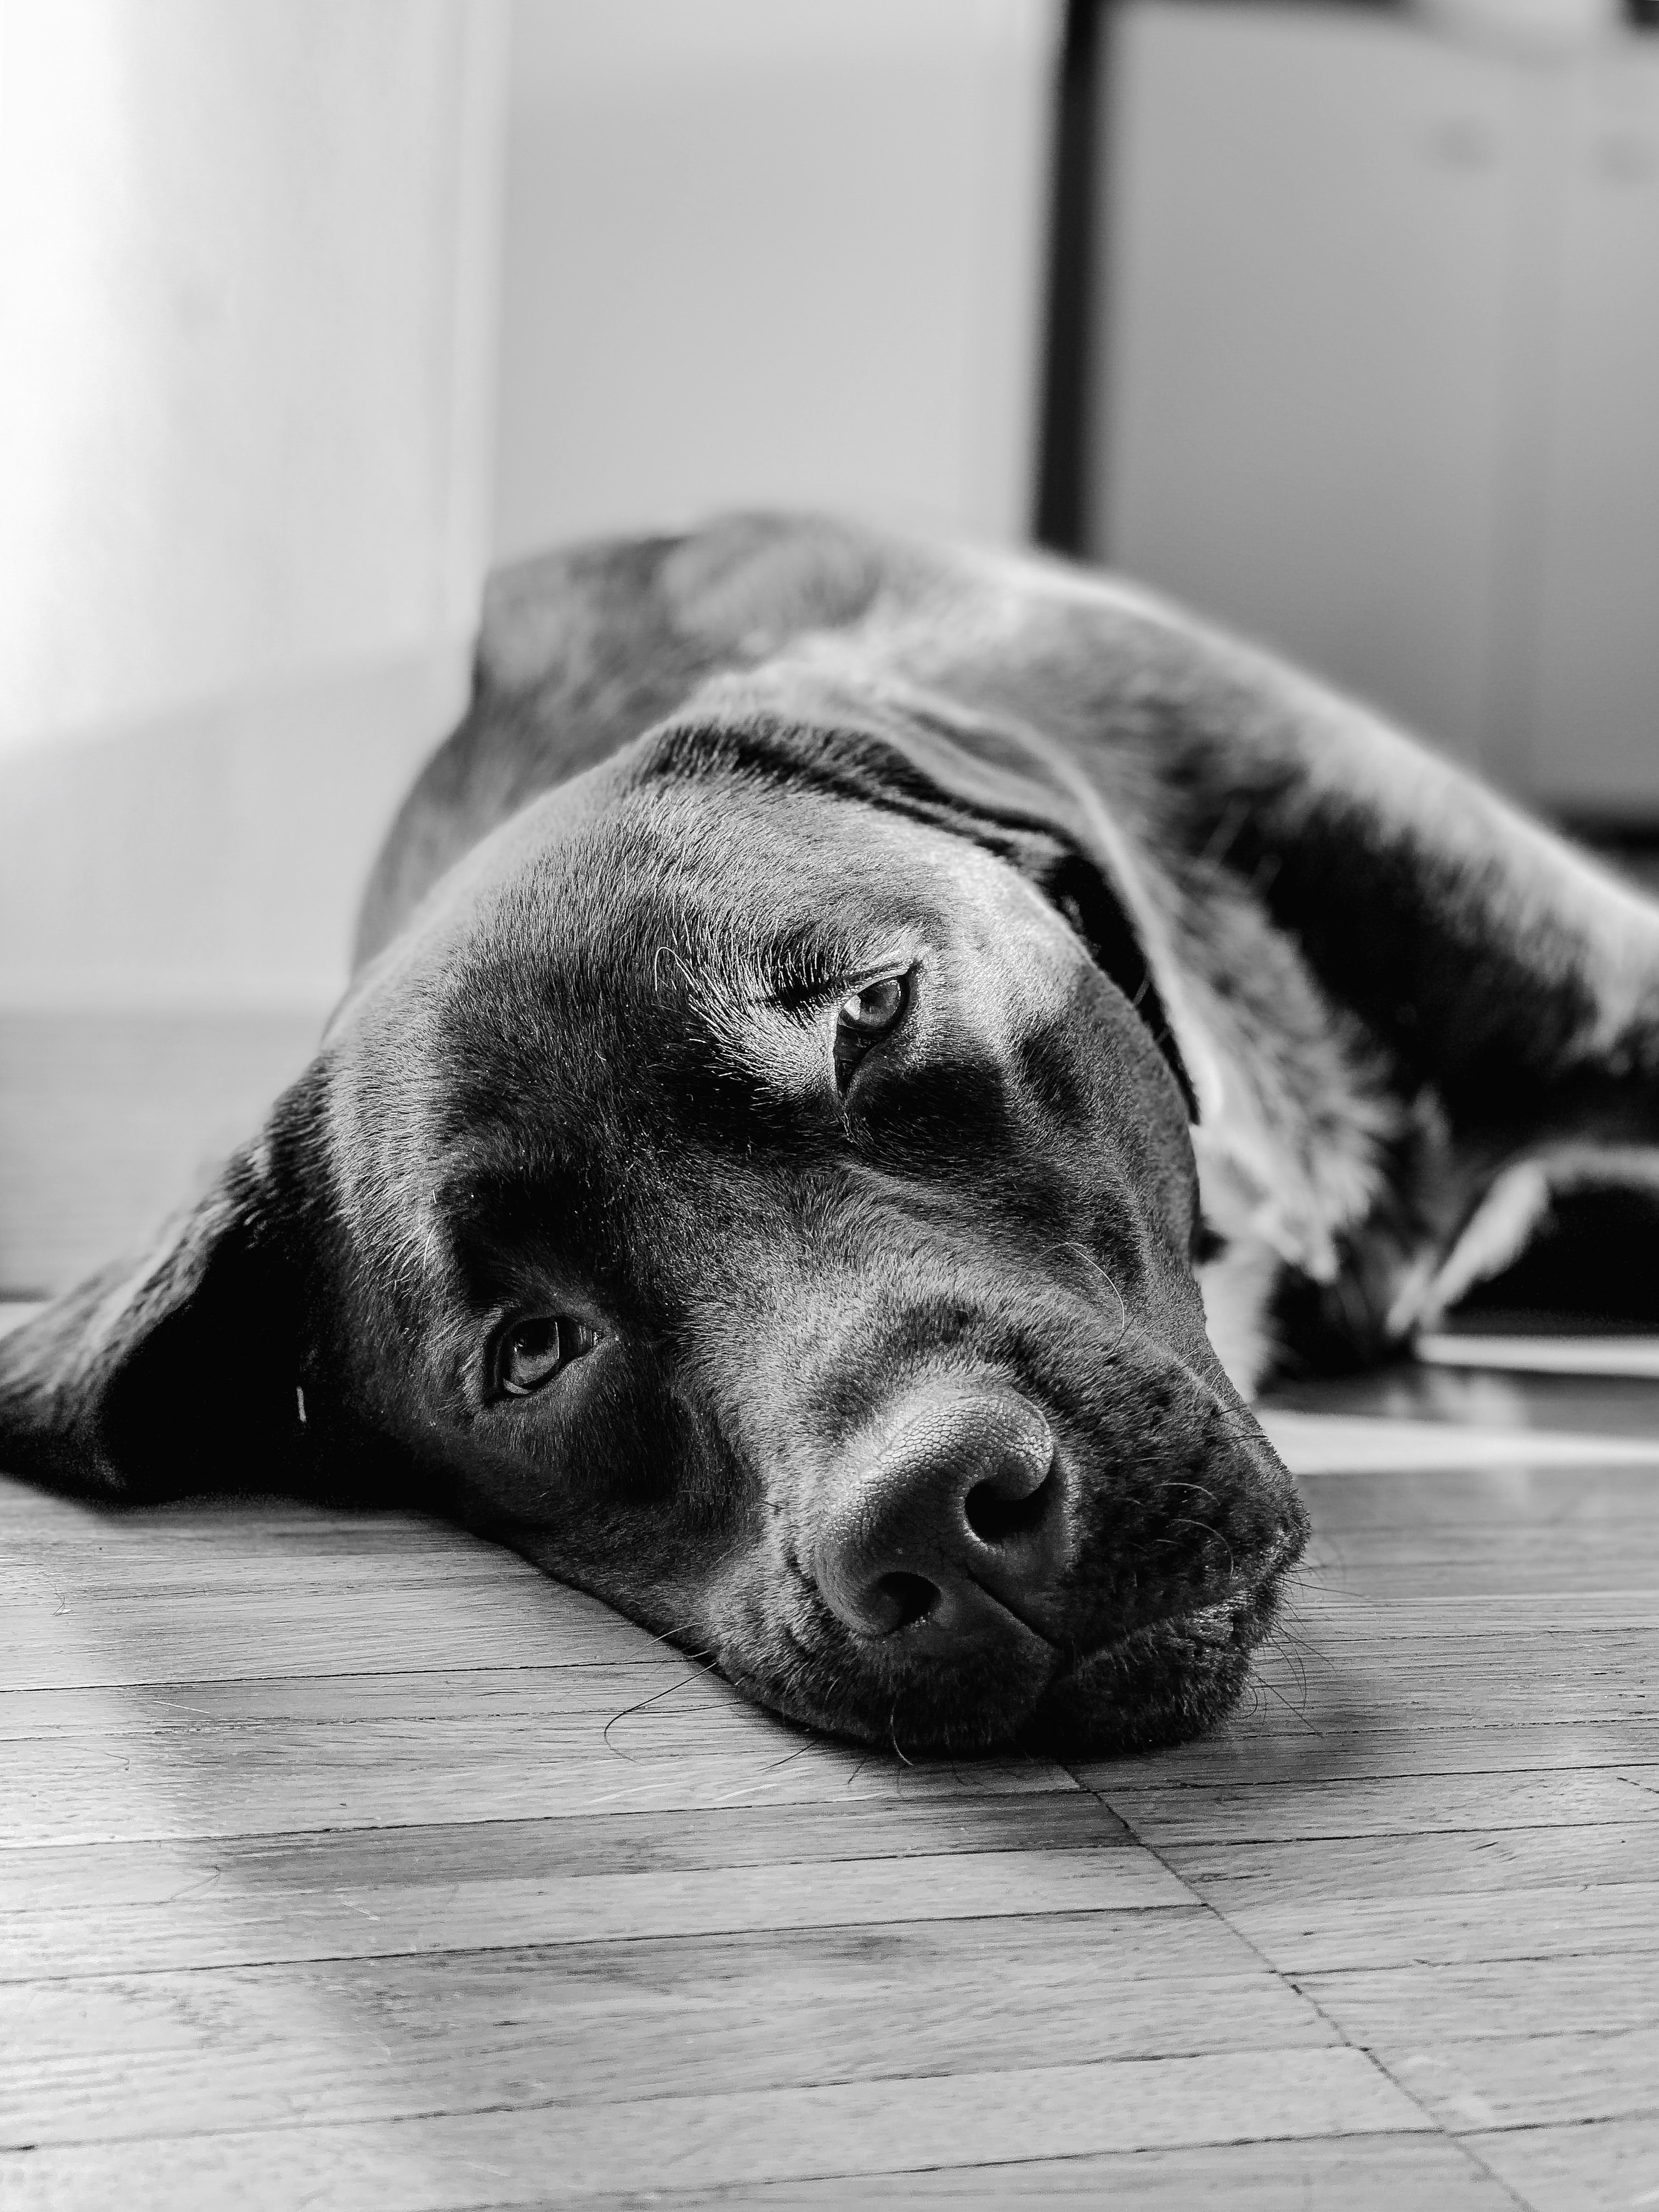 Sad dog that isn´t getting the proper care it needs